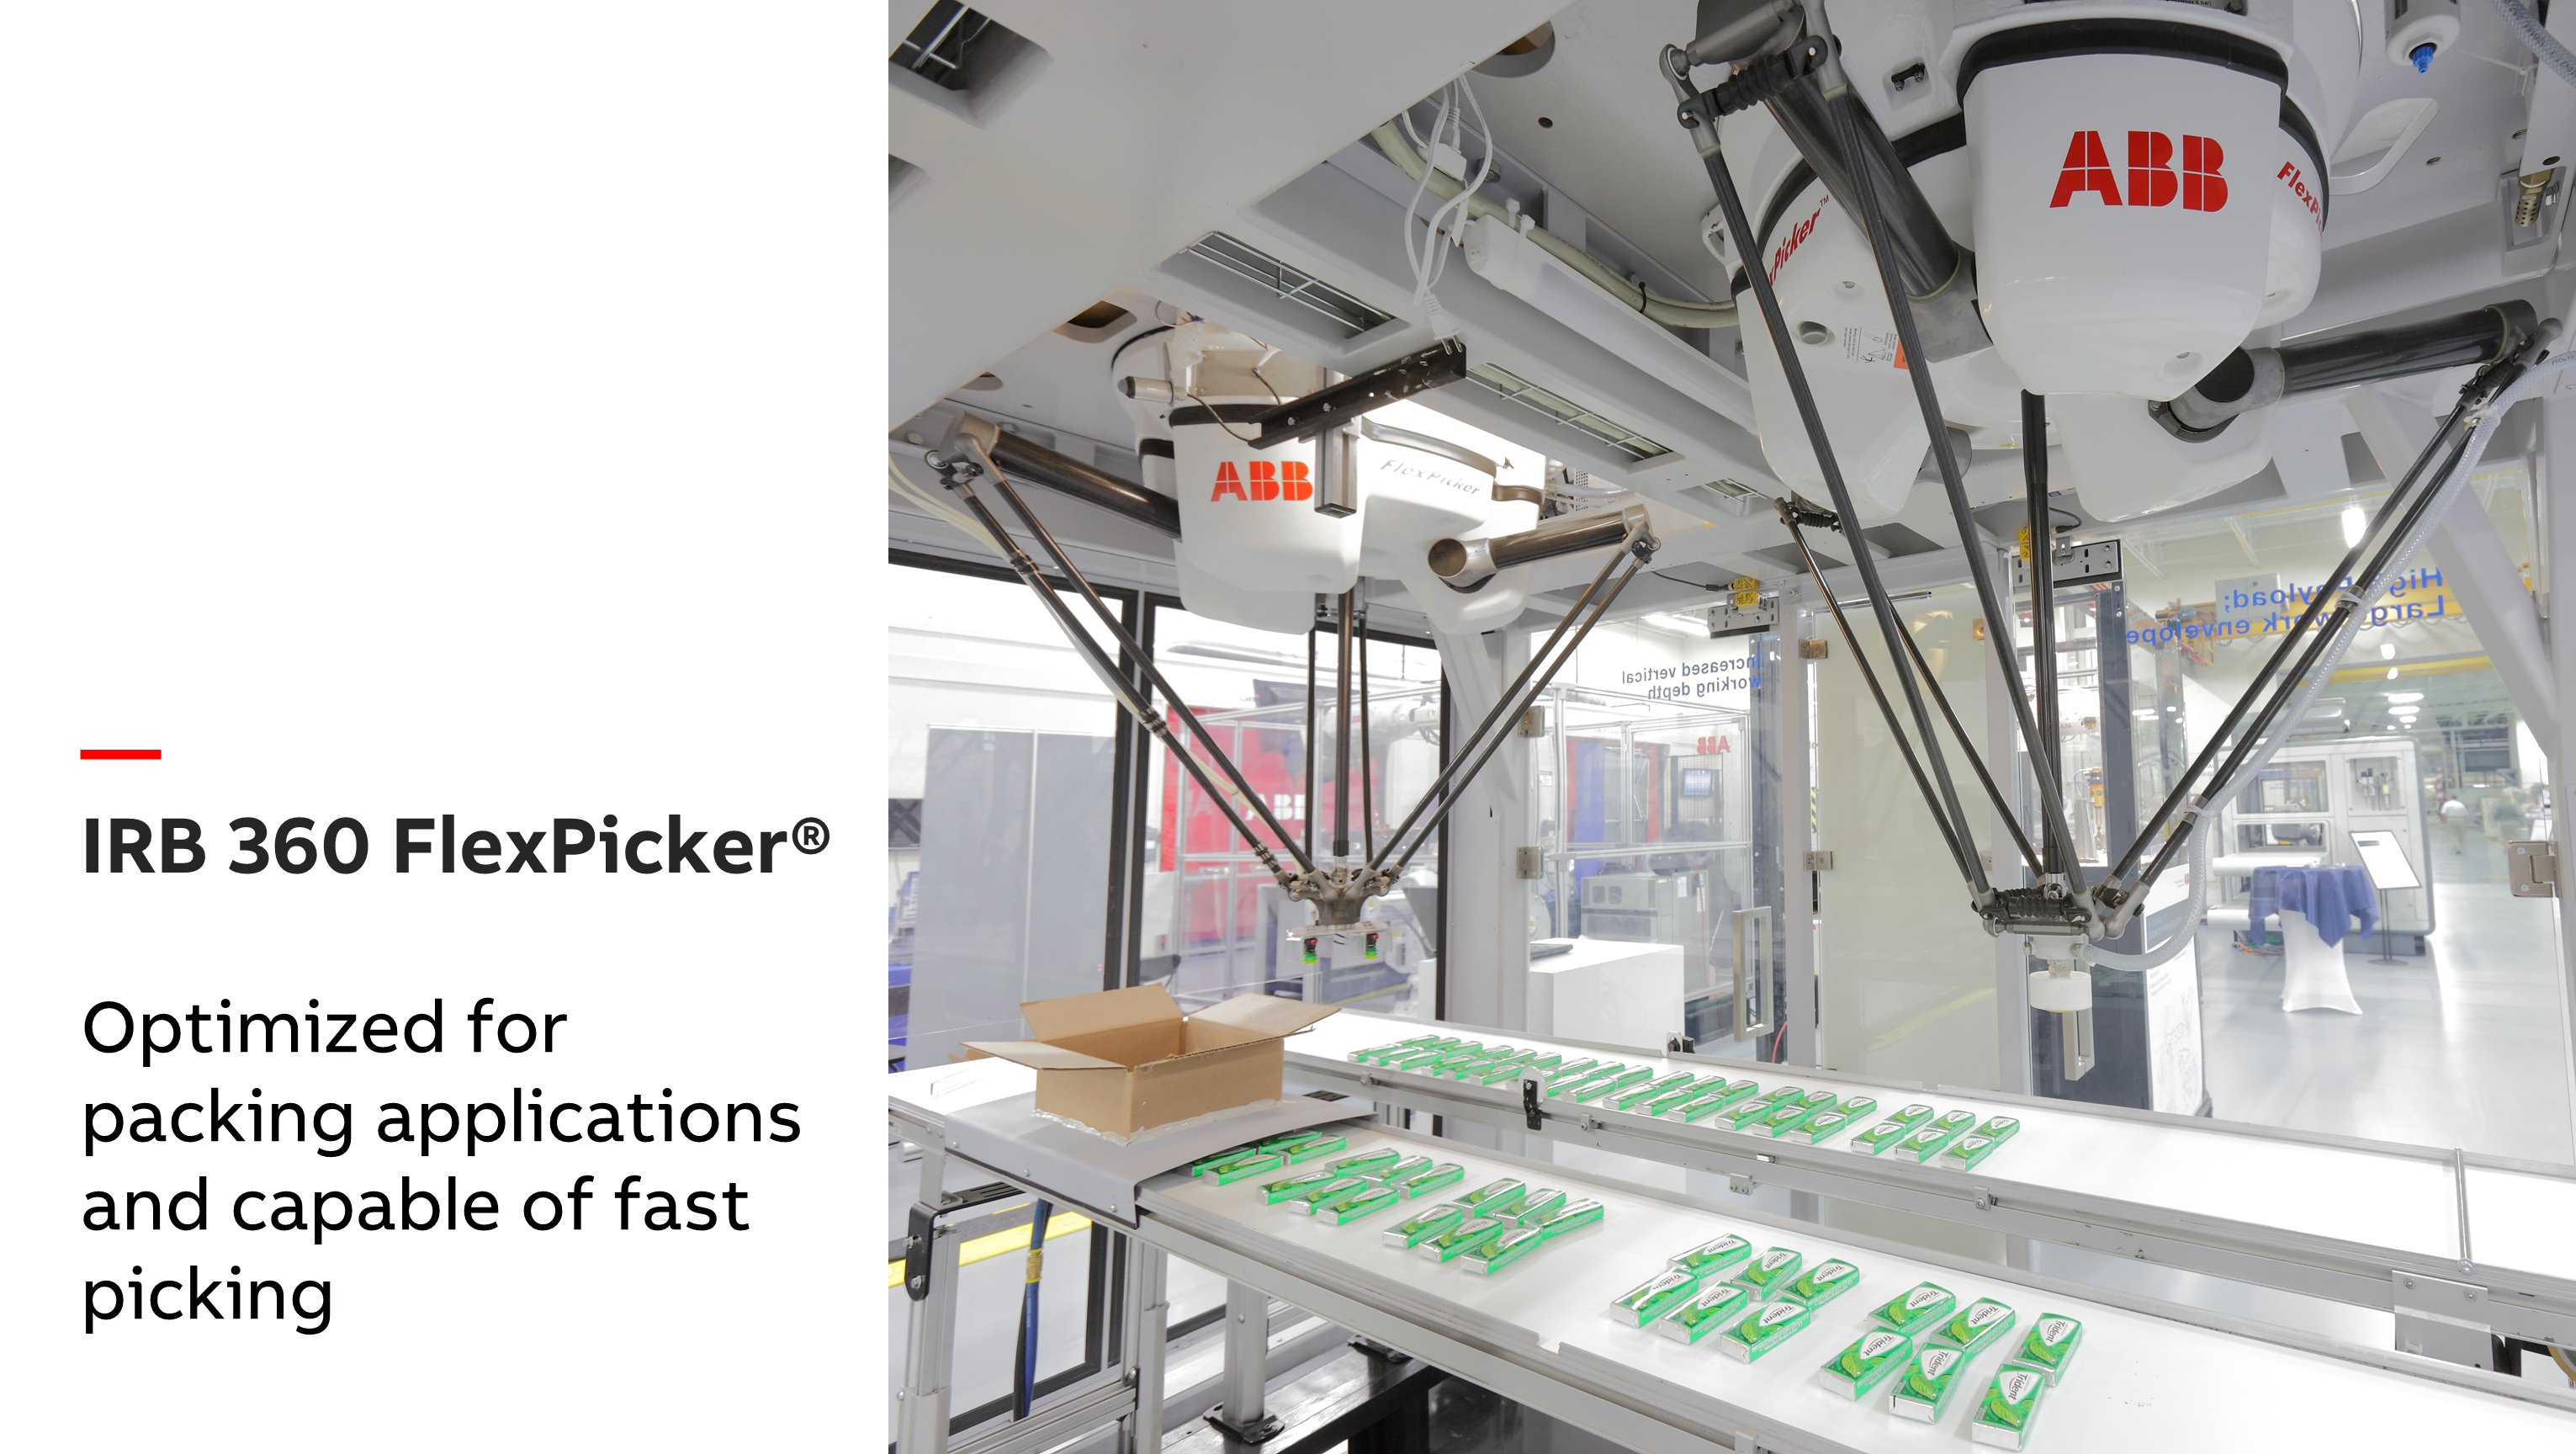 تويتر \ ABB Robotics على تويتر: "IRB 360 FlexPicker is the fastest industrial delta robot in the world while offering high and accuracy. w/ PickMaster® #software to simplify #vision configuration